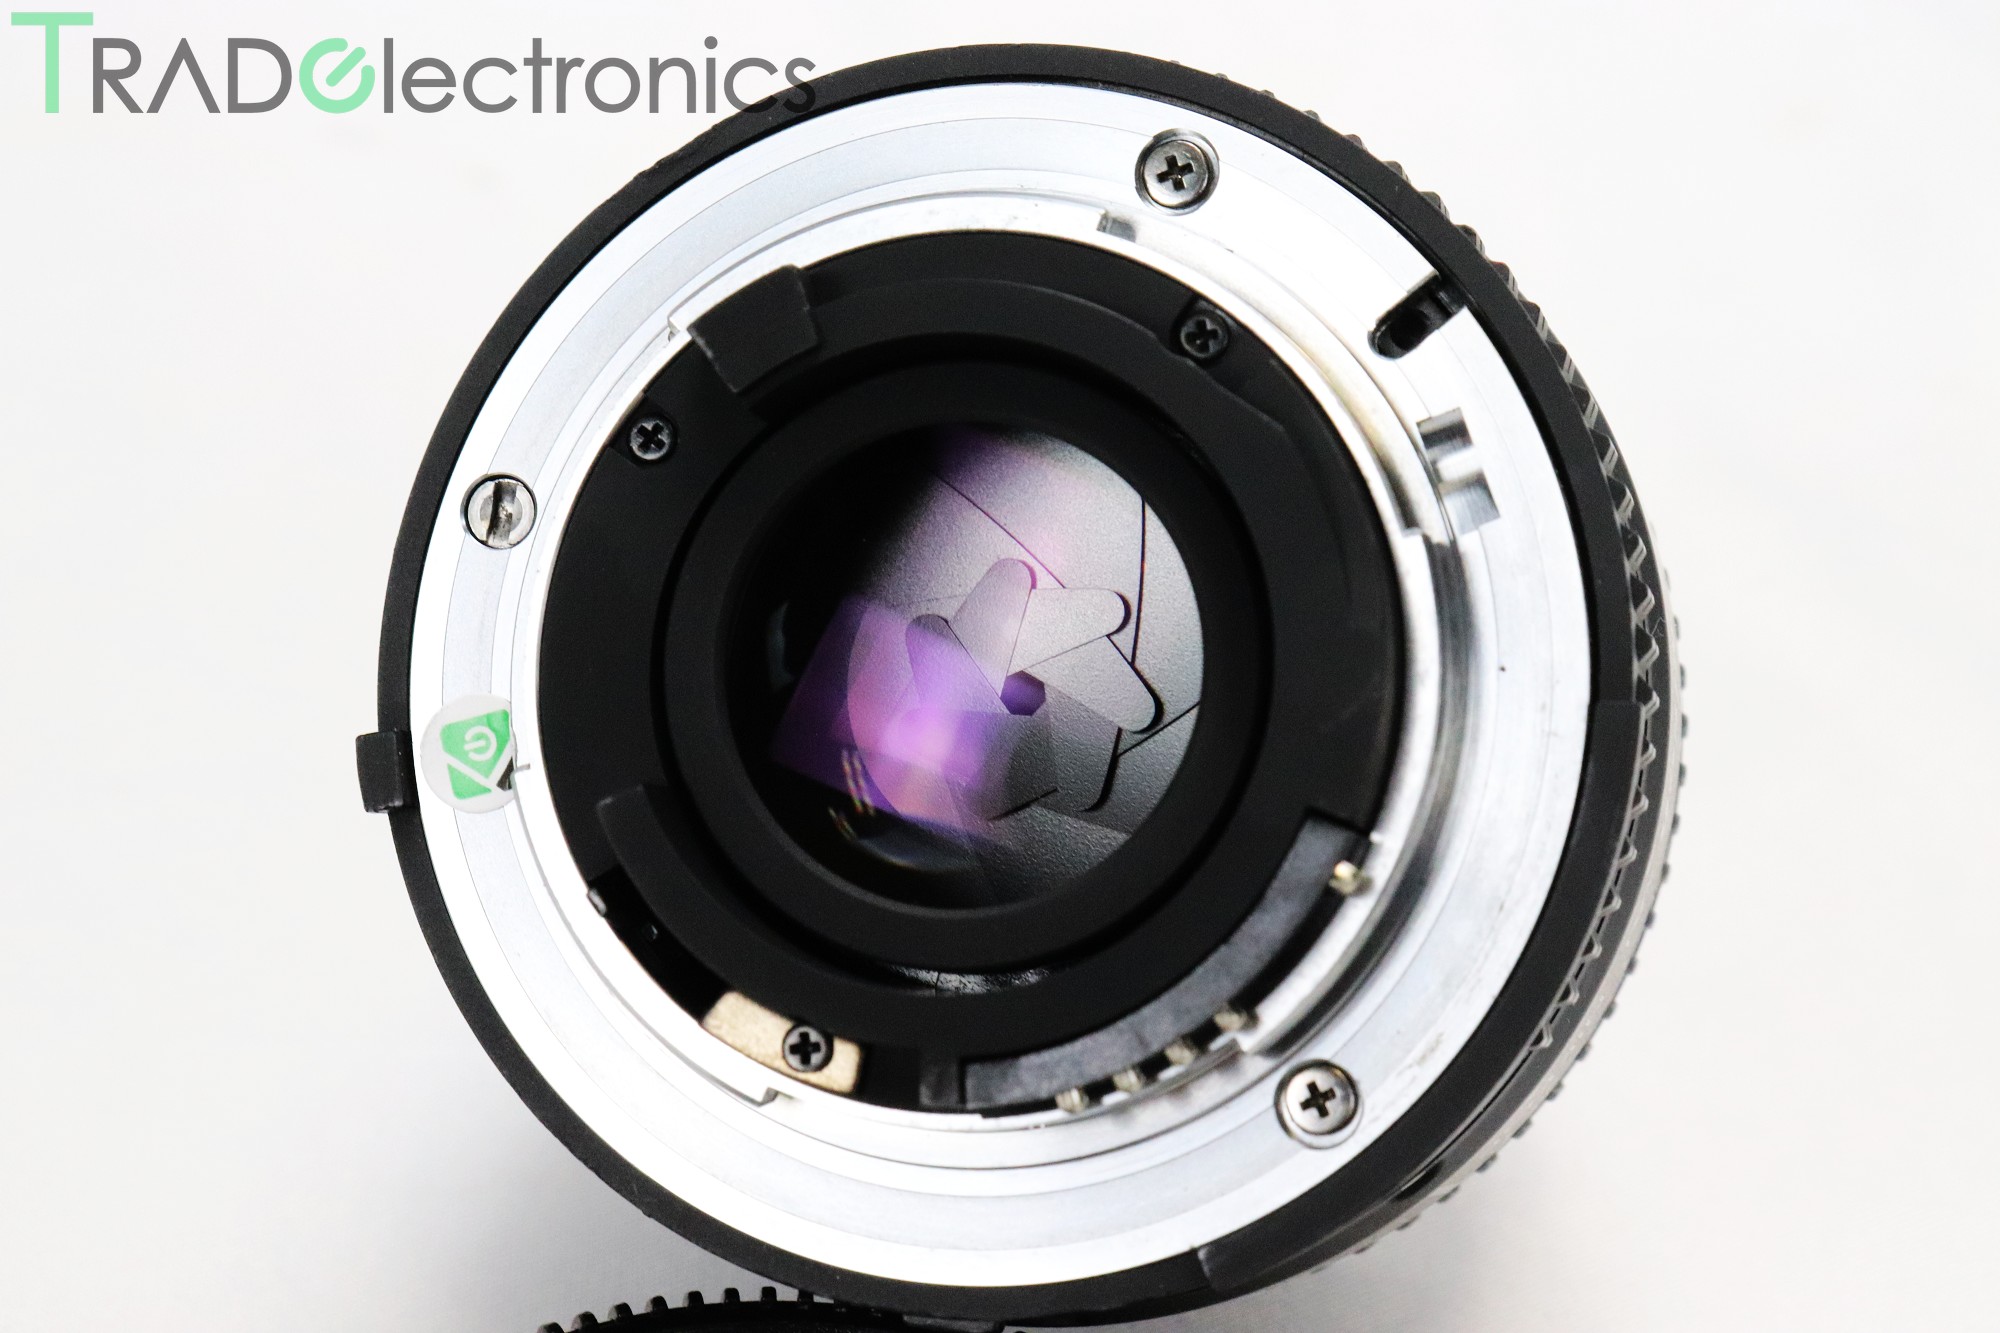 NIKON Prime Lens | 50mm f/1.8D | Used lens for sale | Tradelectronics